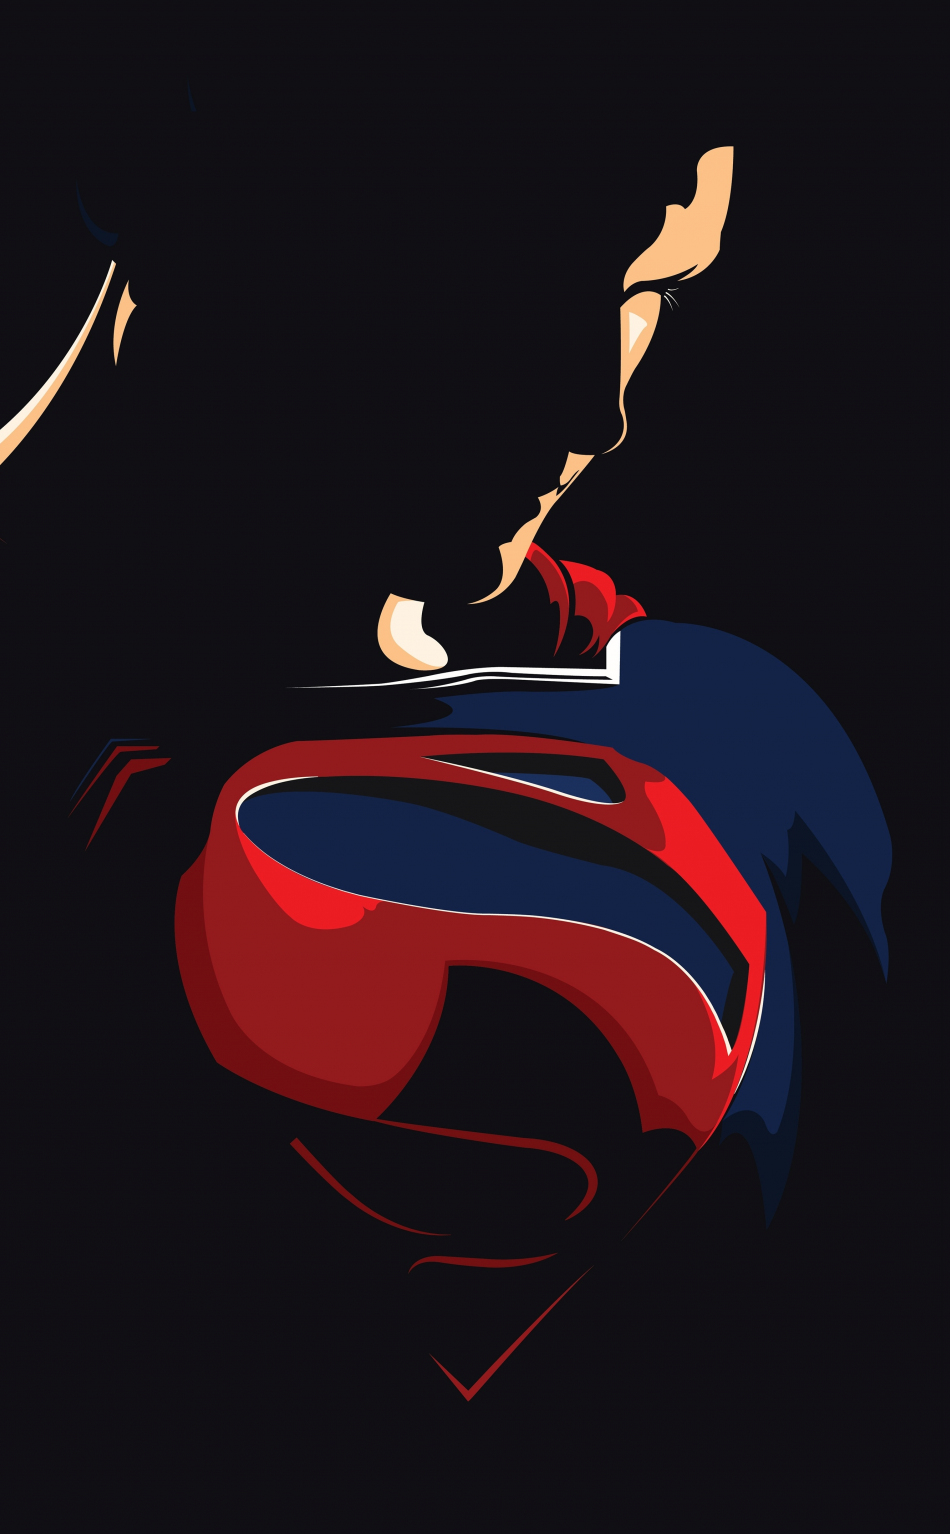 Superman, justice league, minimal and dark, dc comics, 950x1534 wallpaper